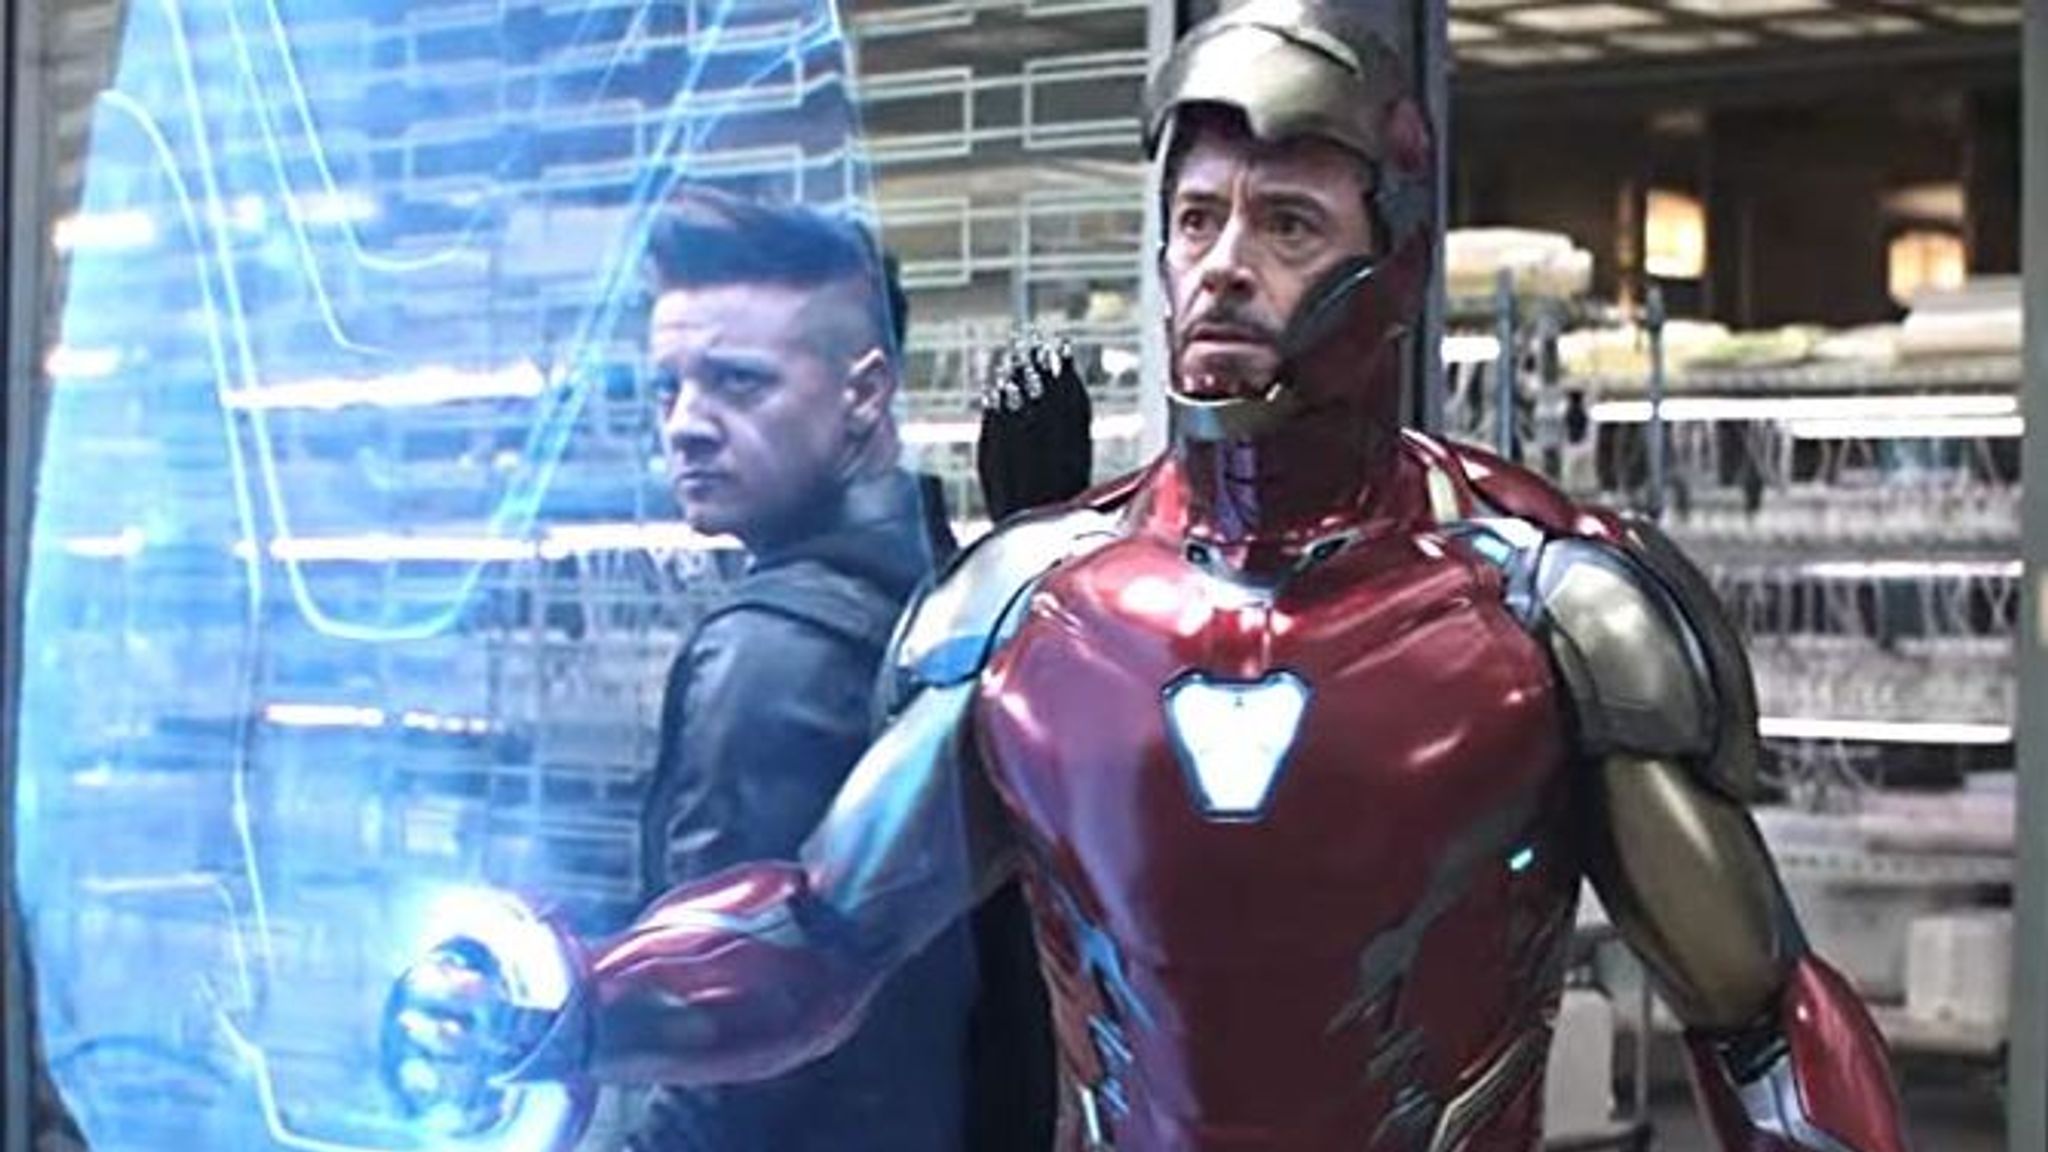 Avengers: Endgame - Iron Man Robert Downey Jr warns fans against spoilers |  Ents & Arts News | Sky News